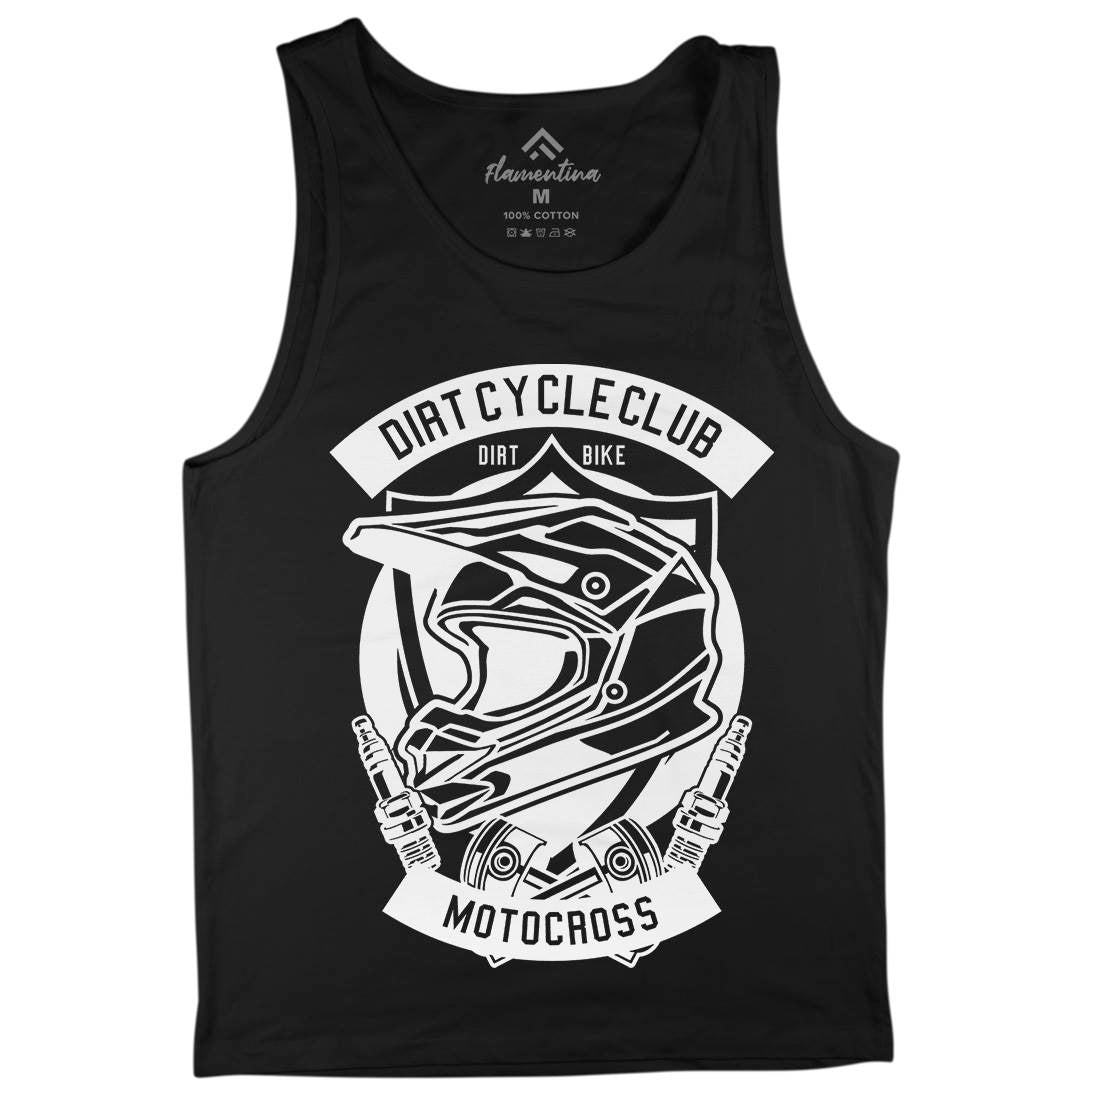 Dirty Cycle Club Mens Tank Top Vest Motorcycles B532